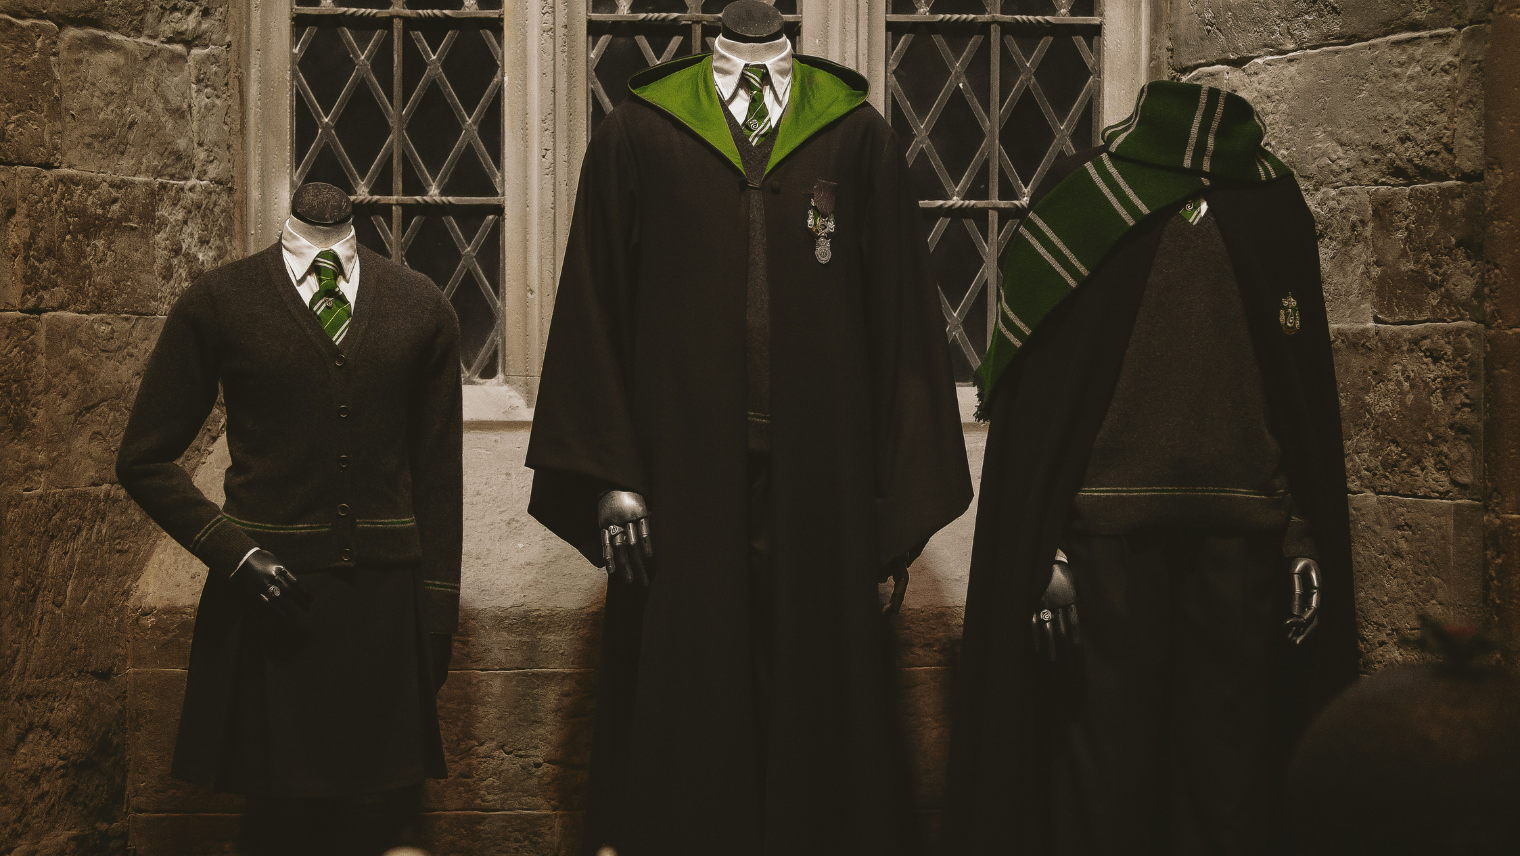 Harry Potter costumes at Warner Bros studio tour